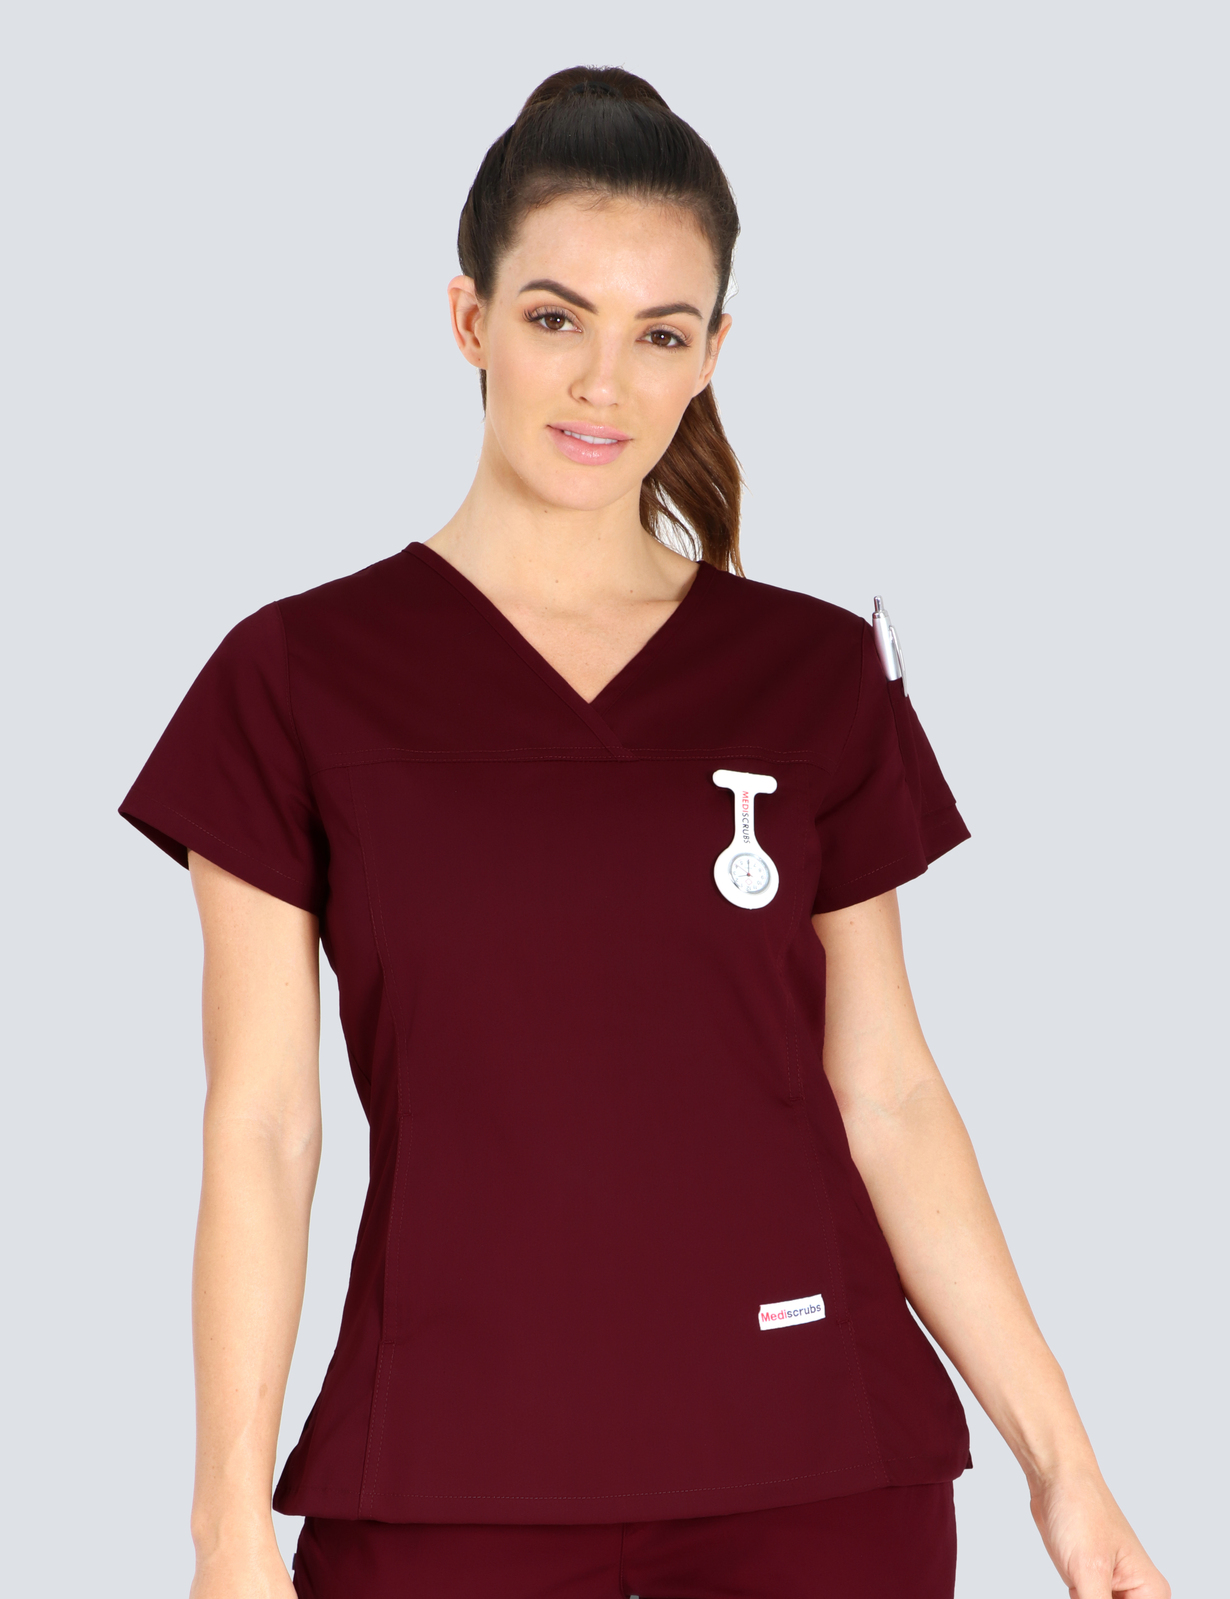 Queensland Children's Hospital Emergency Department Nurse Unit Manager Uniform Top Bundle  (Women's Fit Top in Burgundy incl Logos)